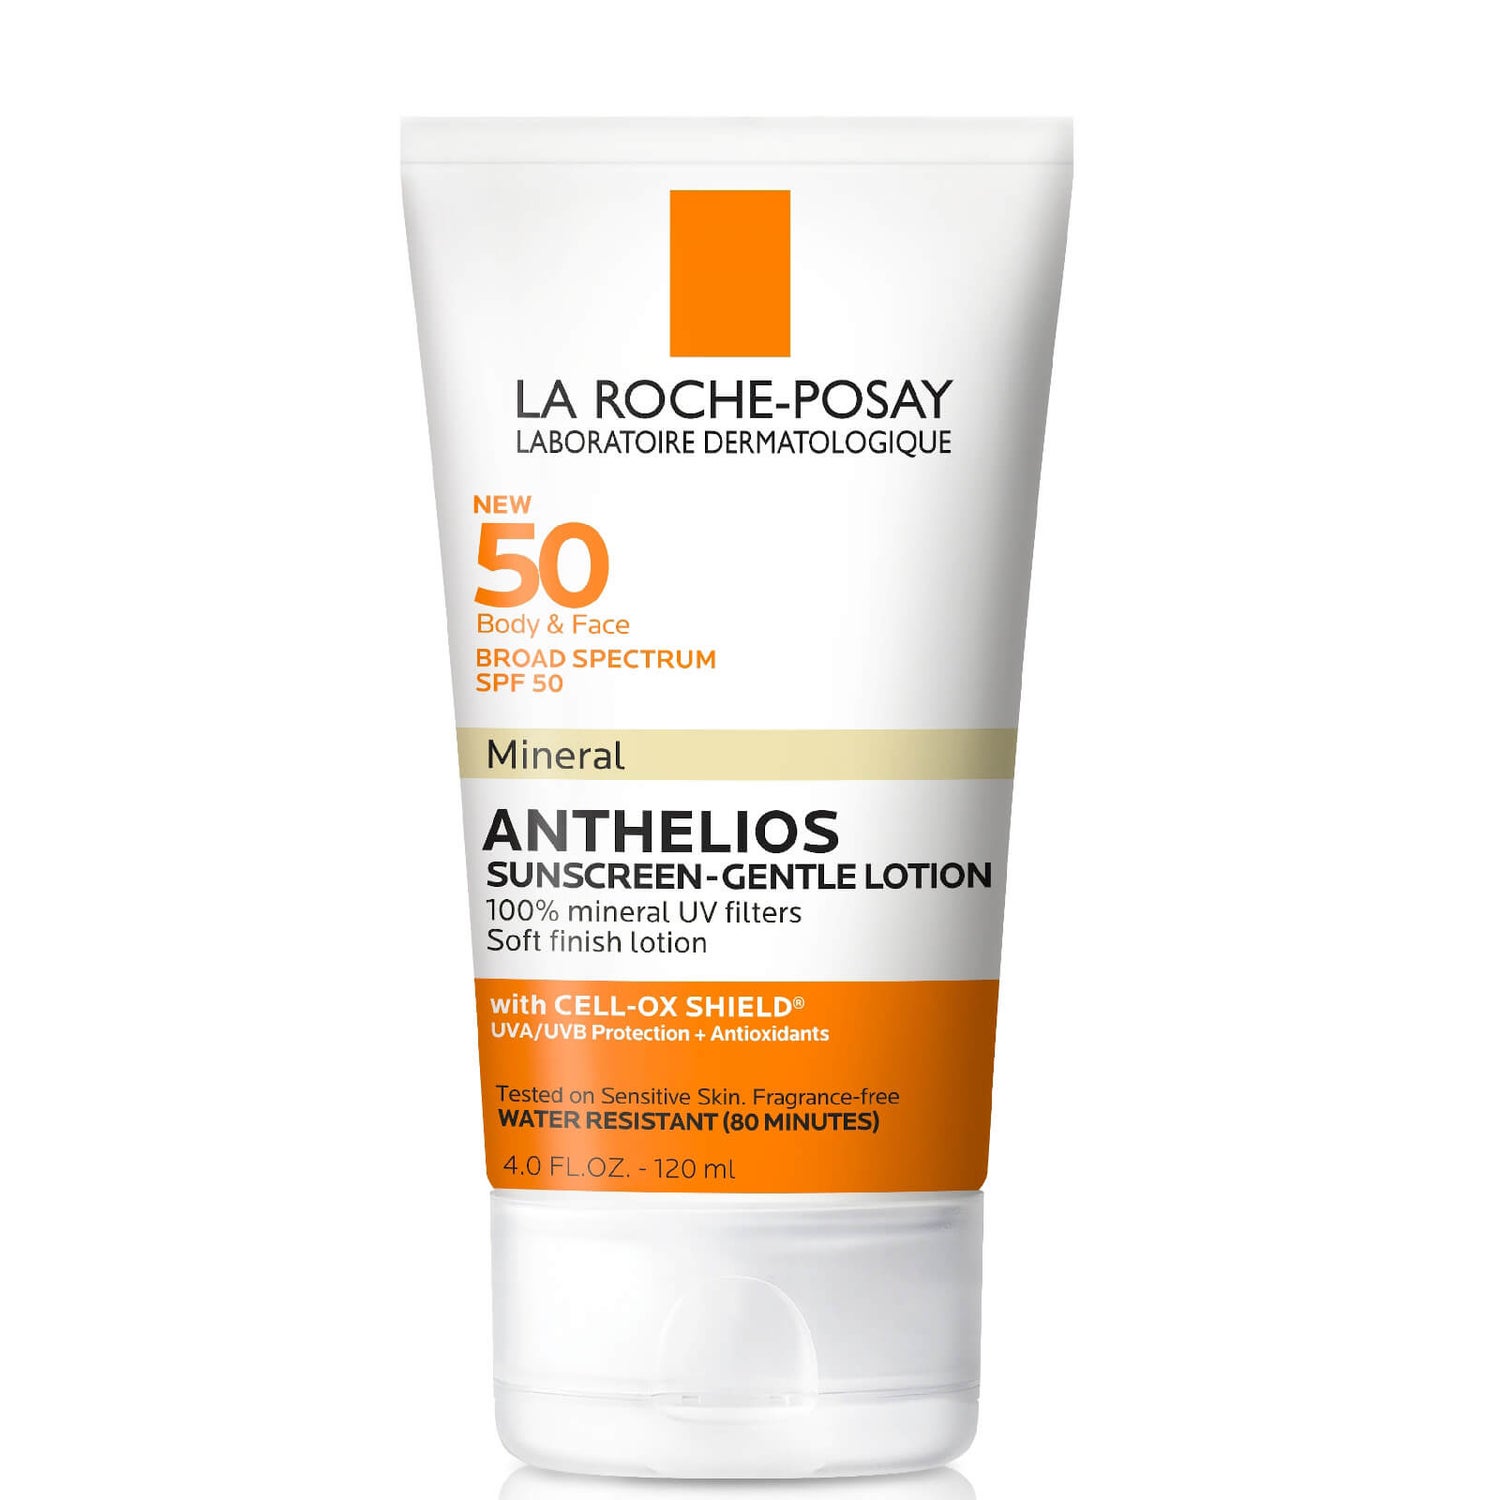 La Roche-Posay Anthelios SPF 50 Mineral Sunscreen - Gentle Lotion (4 fl. oz.)